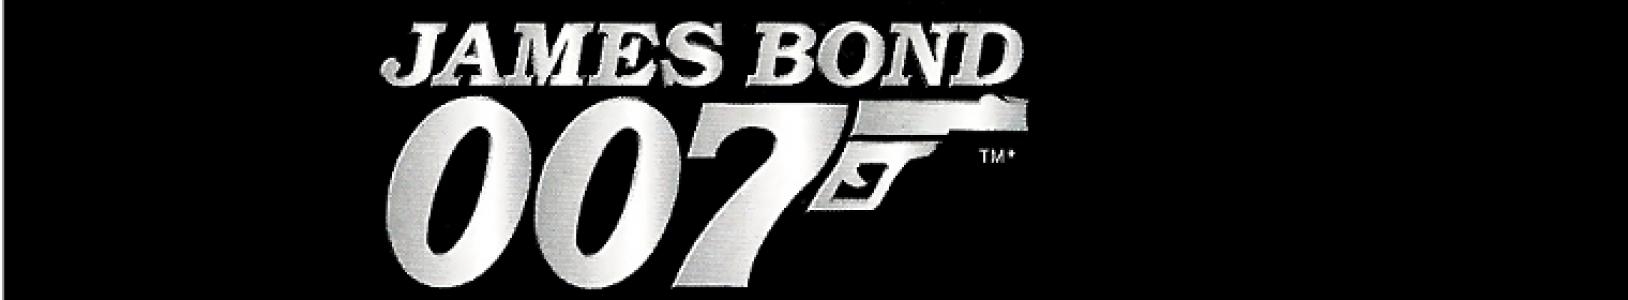 James Bond 007 banner